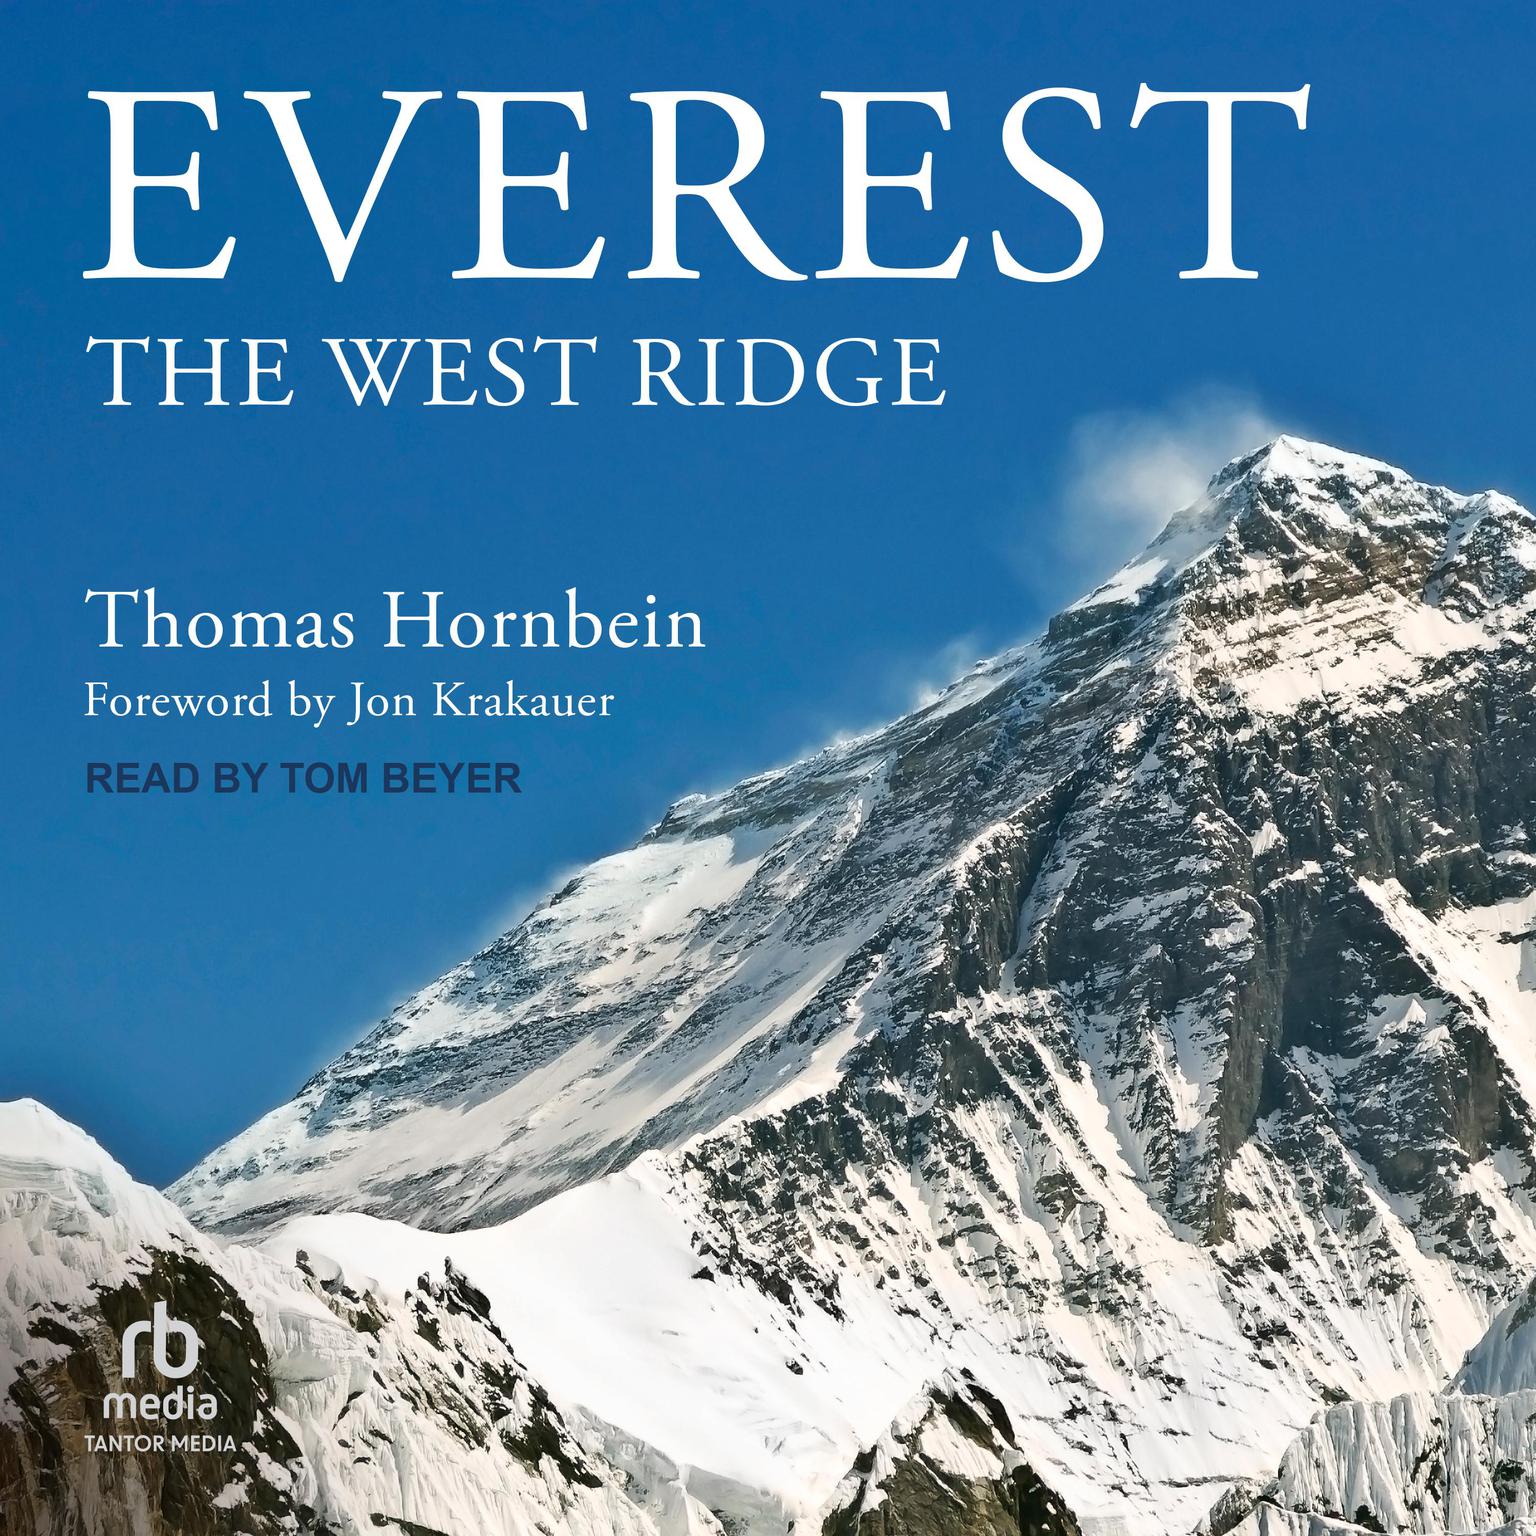 Everest: The West Ridge Audiobook, by Thomas Hornbein